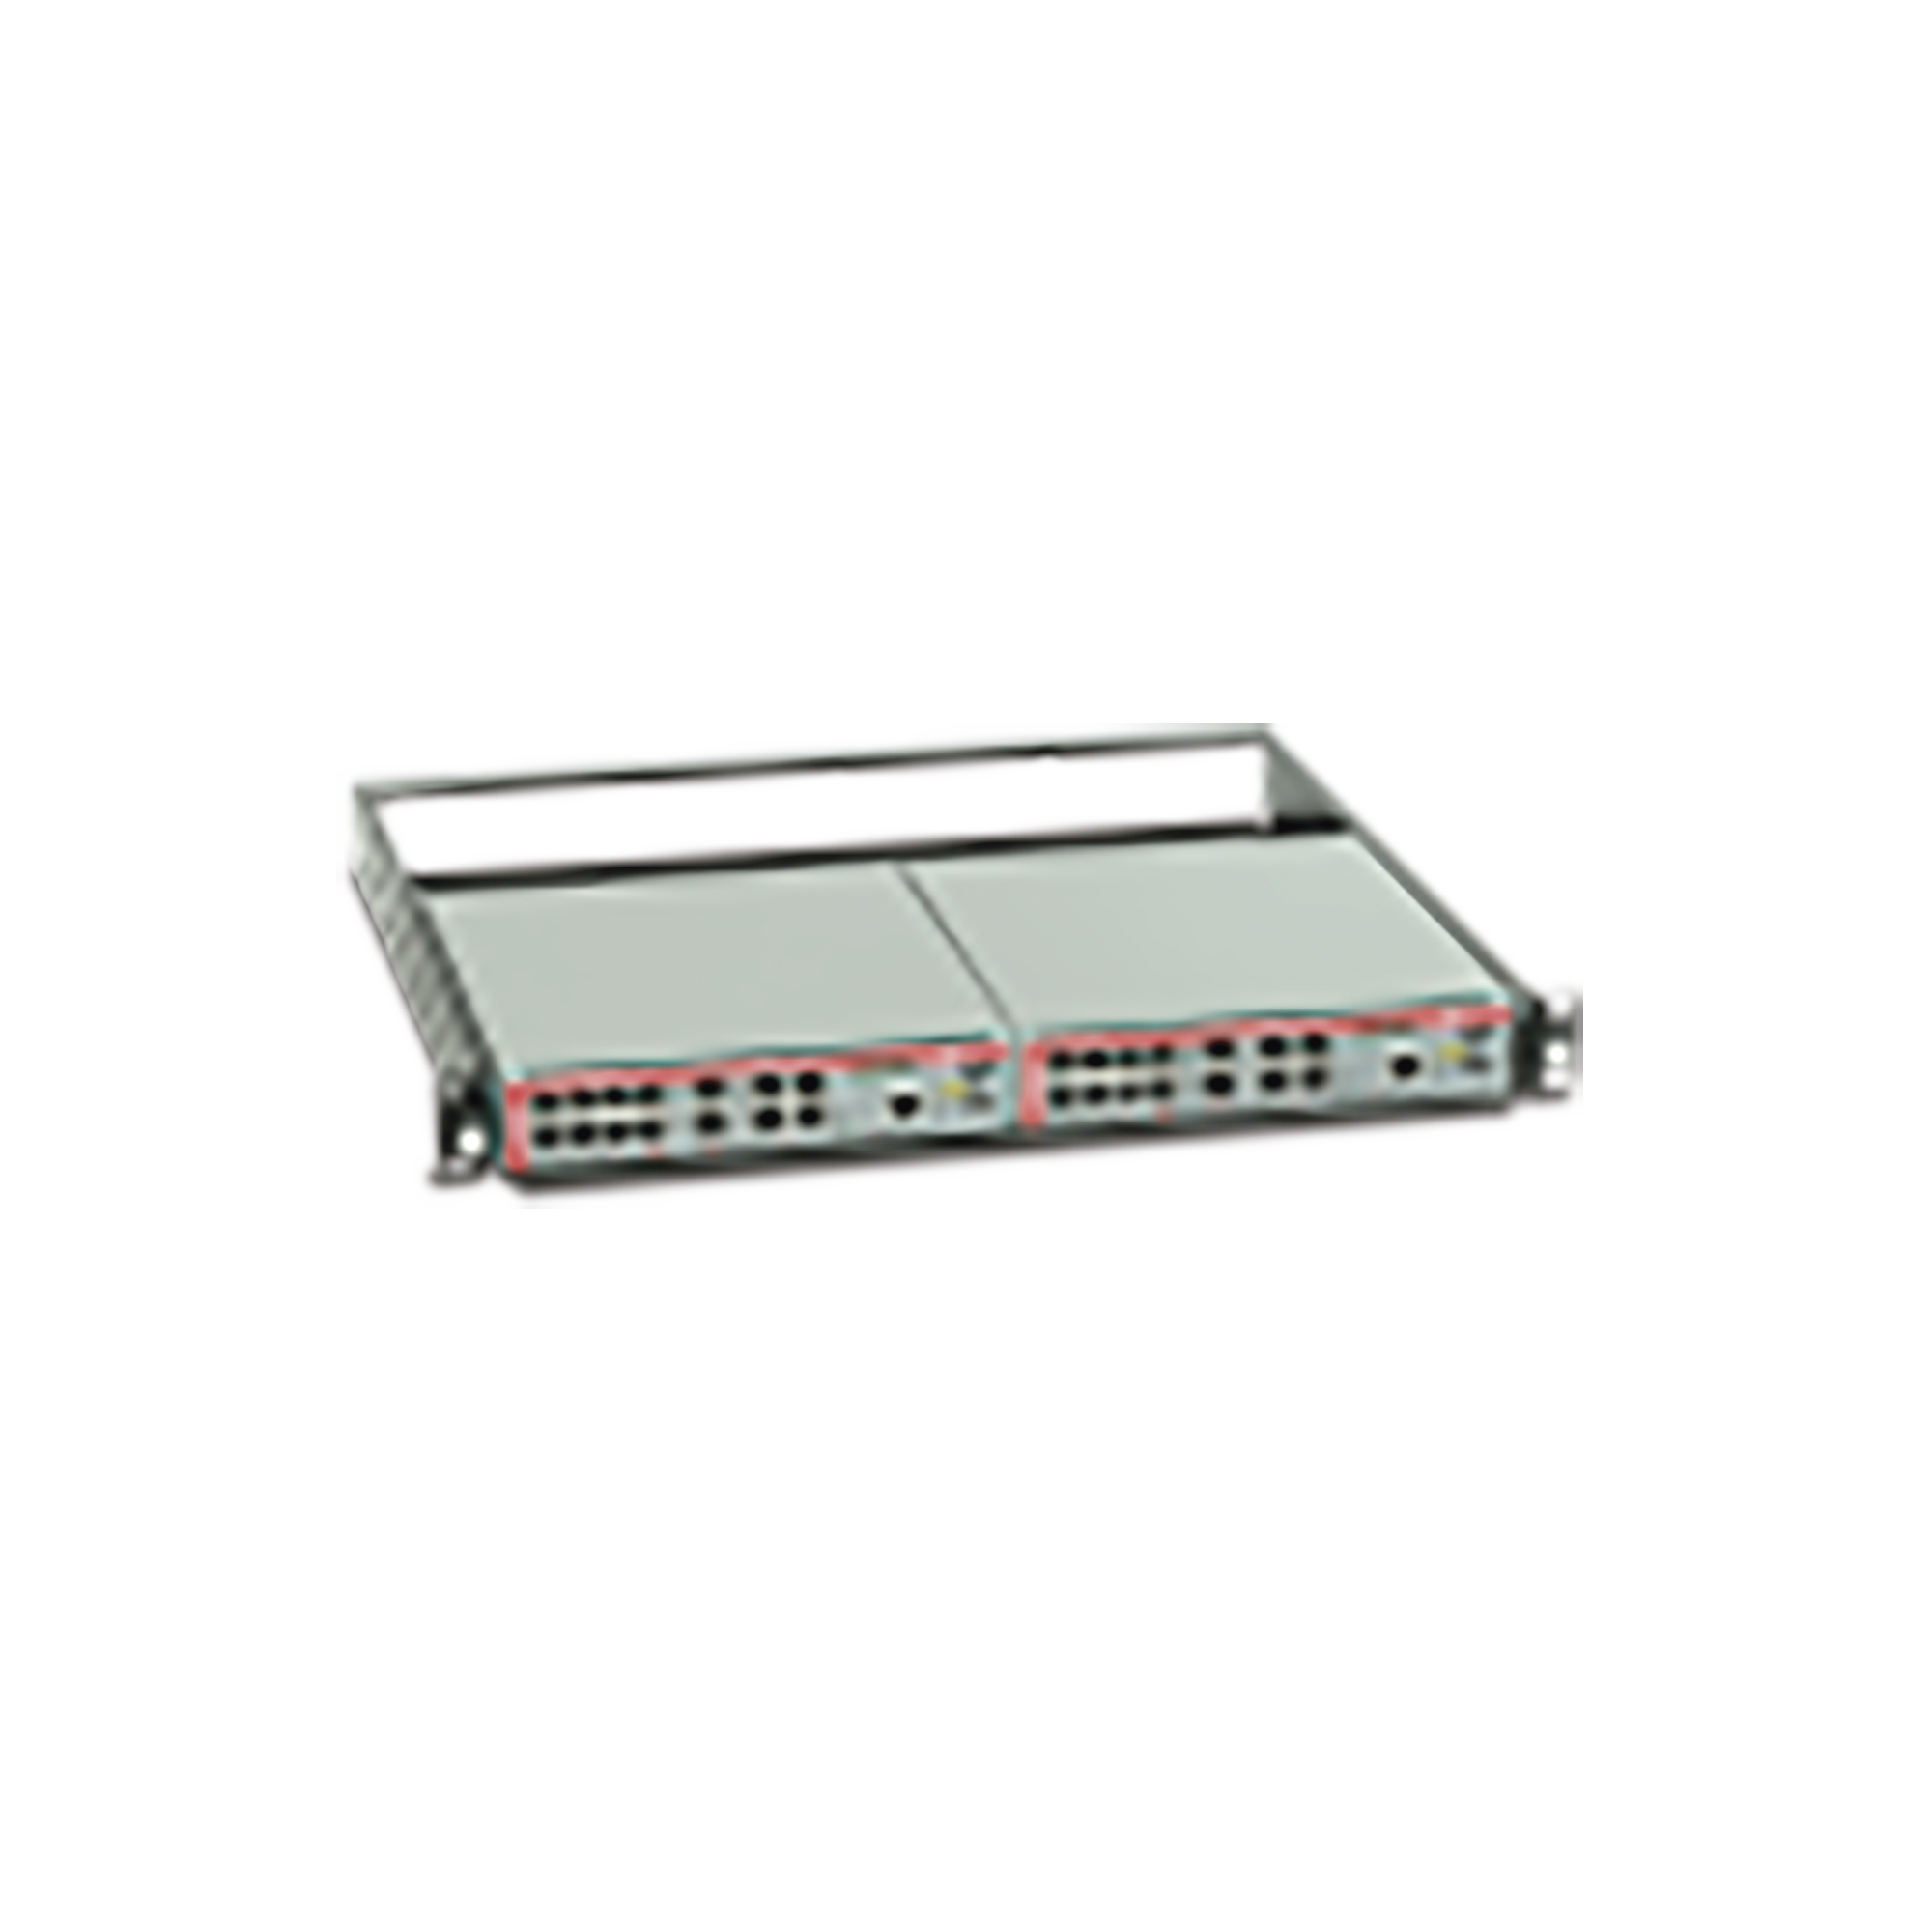 Kit de Montaje en Rack para instalar dos dispositivos AT-x230-10GP / AT-AR-3050S-10 / AT-AR4050S-10